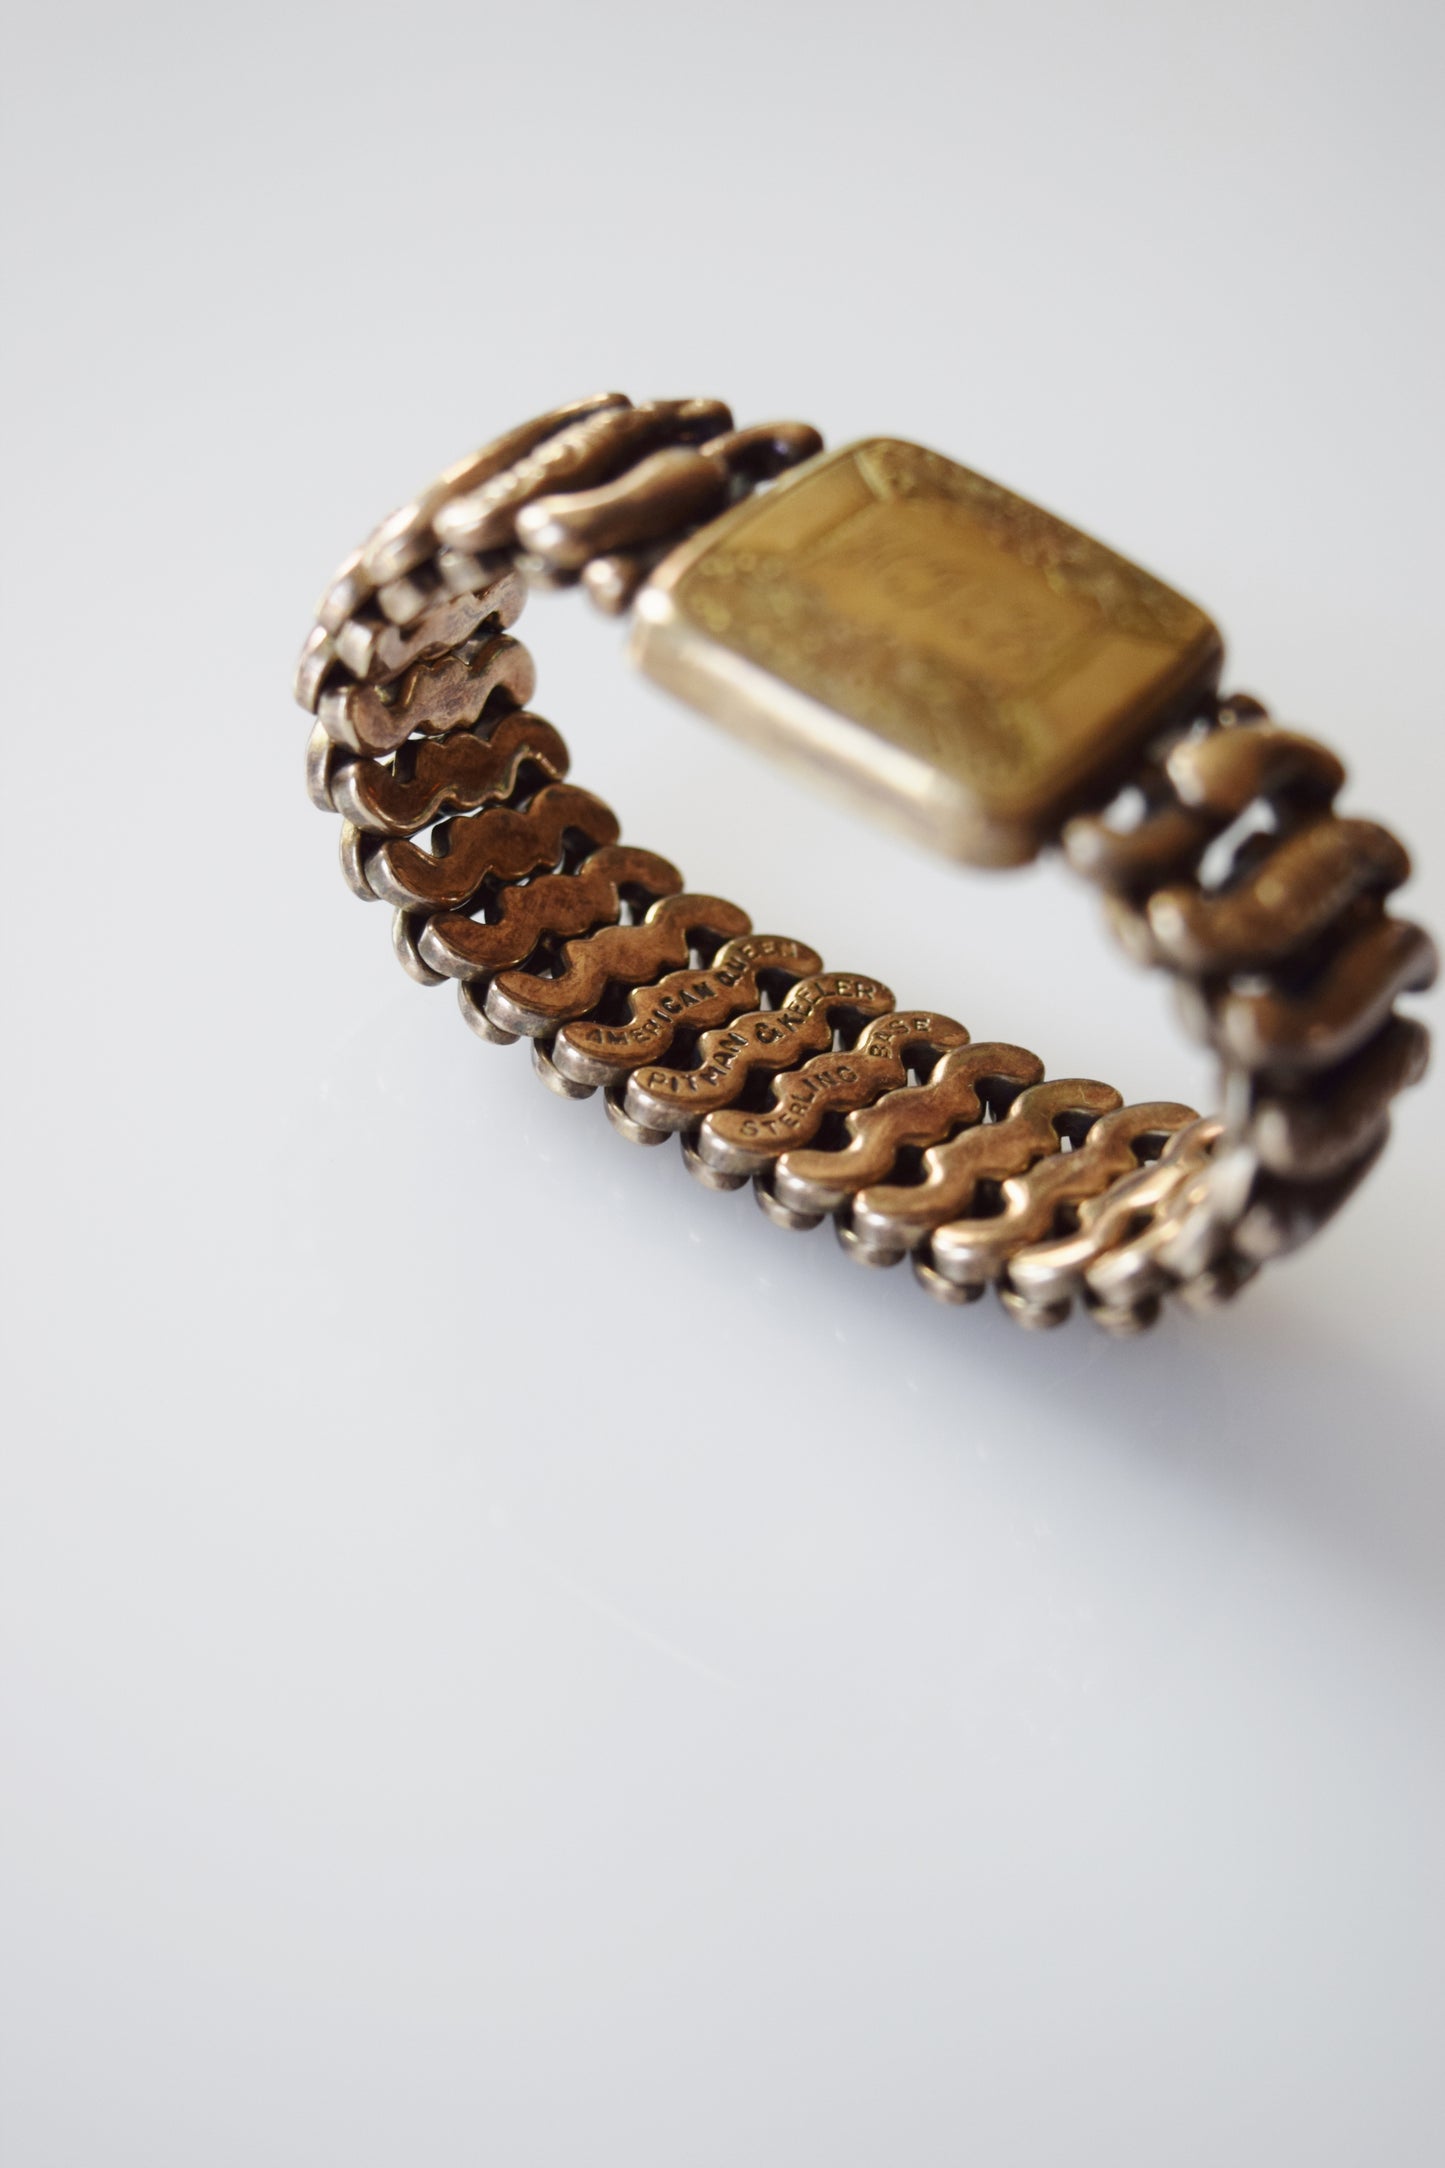 Antique Expandable Sweetheart Bracelet with Monogram